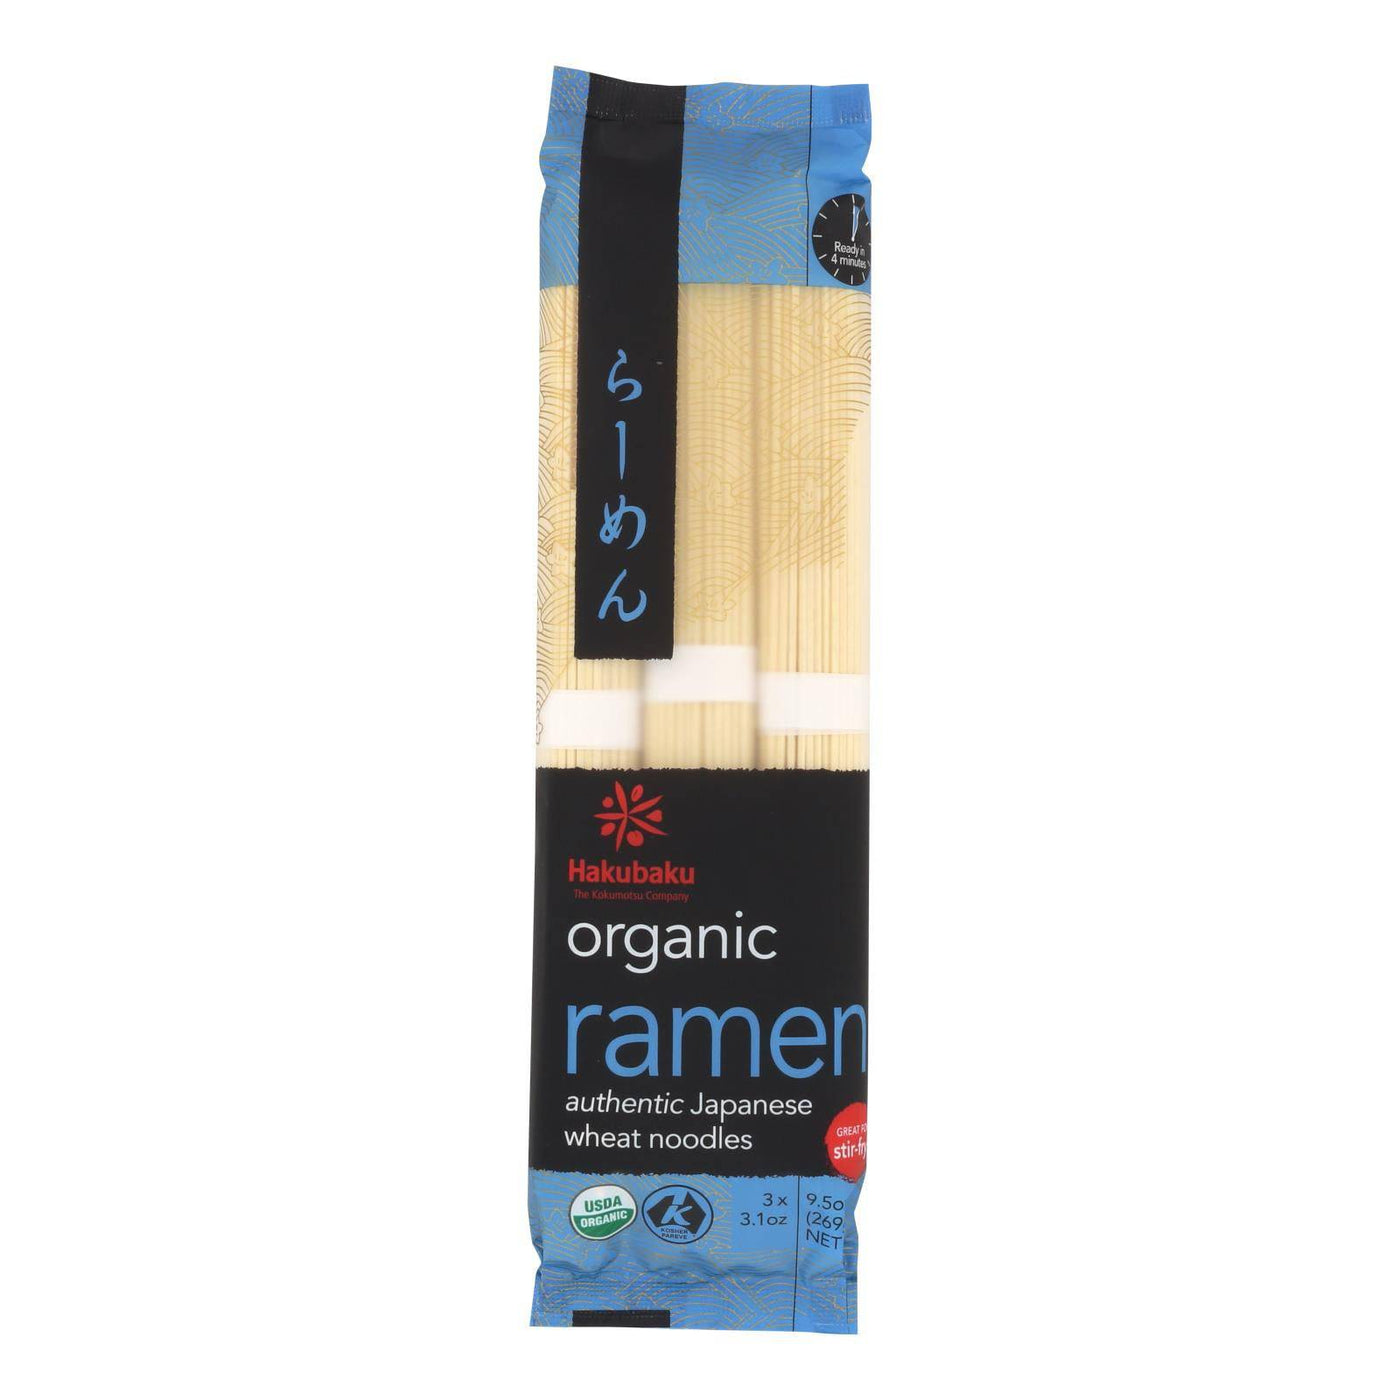 Buy Hakubaku Organic Noodles - Ramen - Case Of 8 - 9.52 Oz  at OnlyNaturals.us